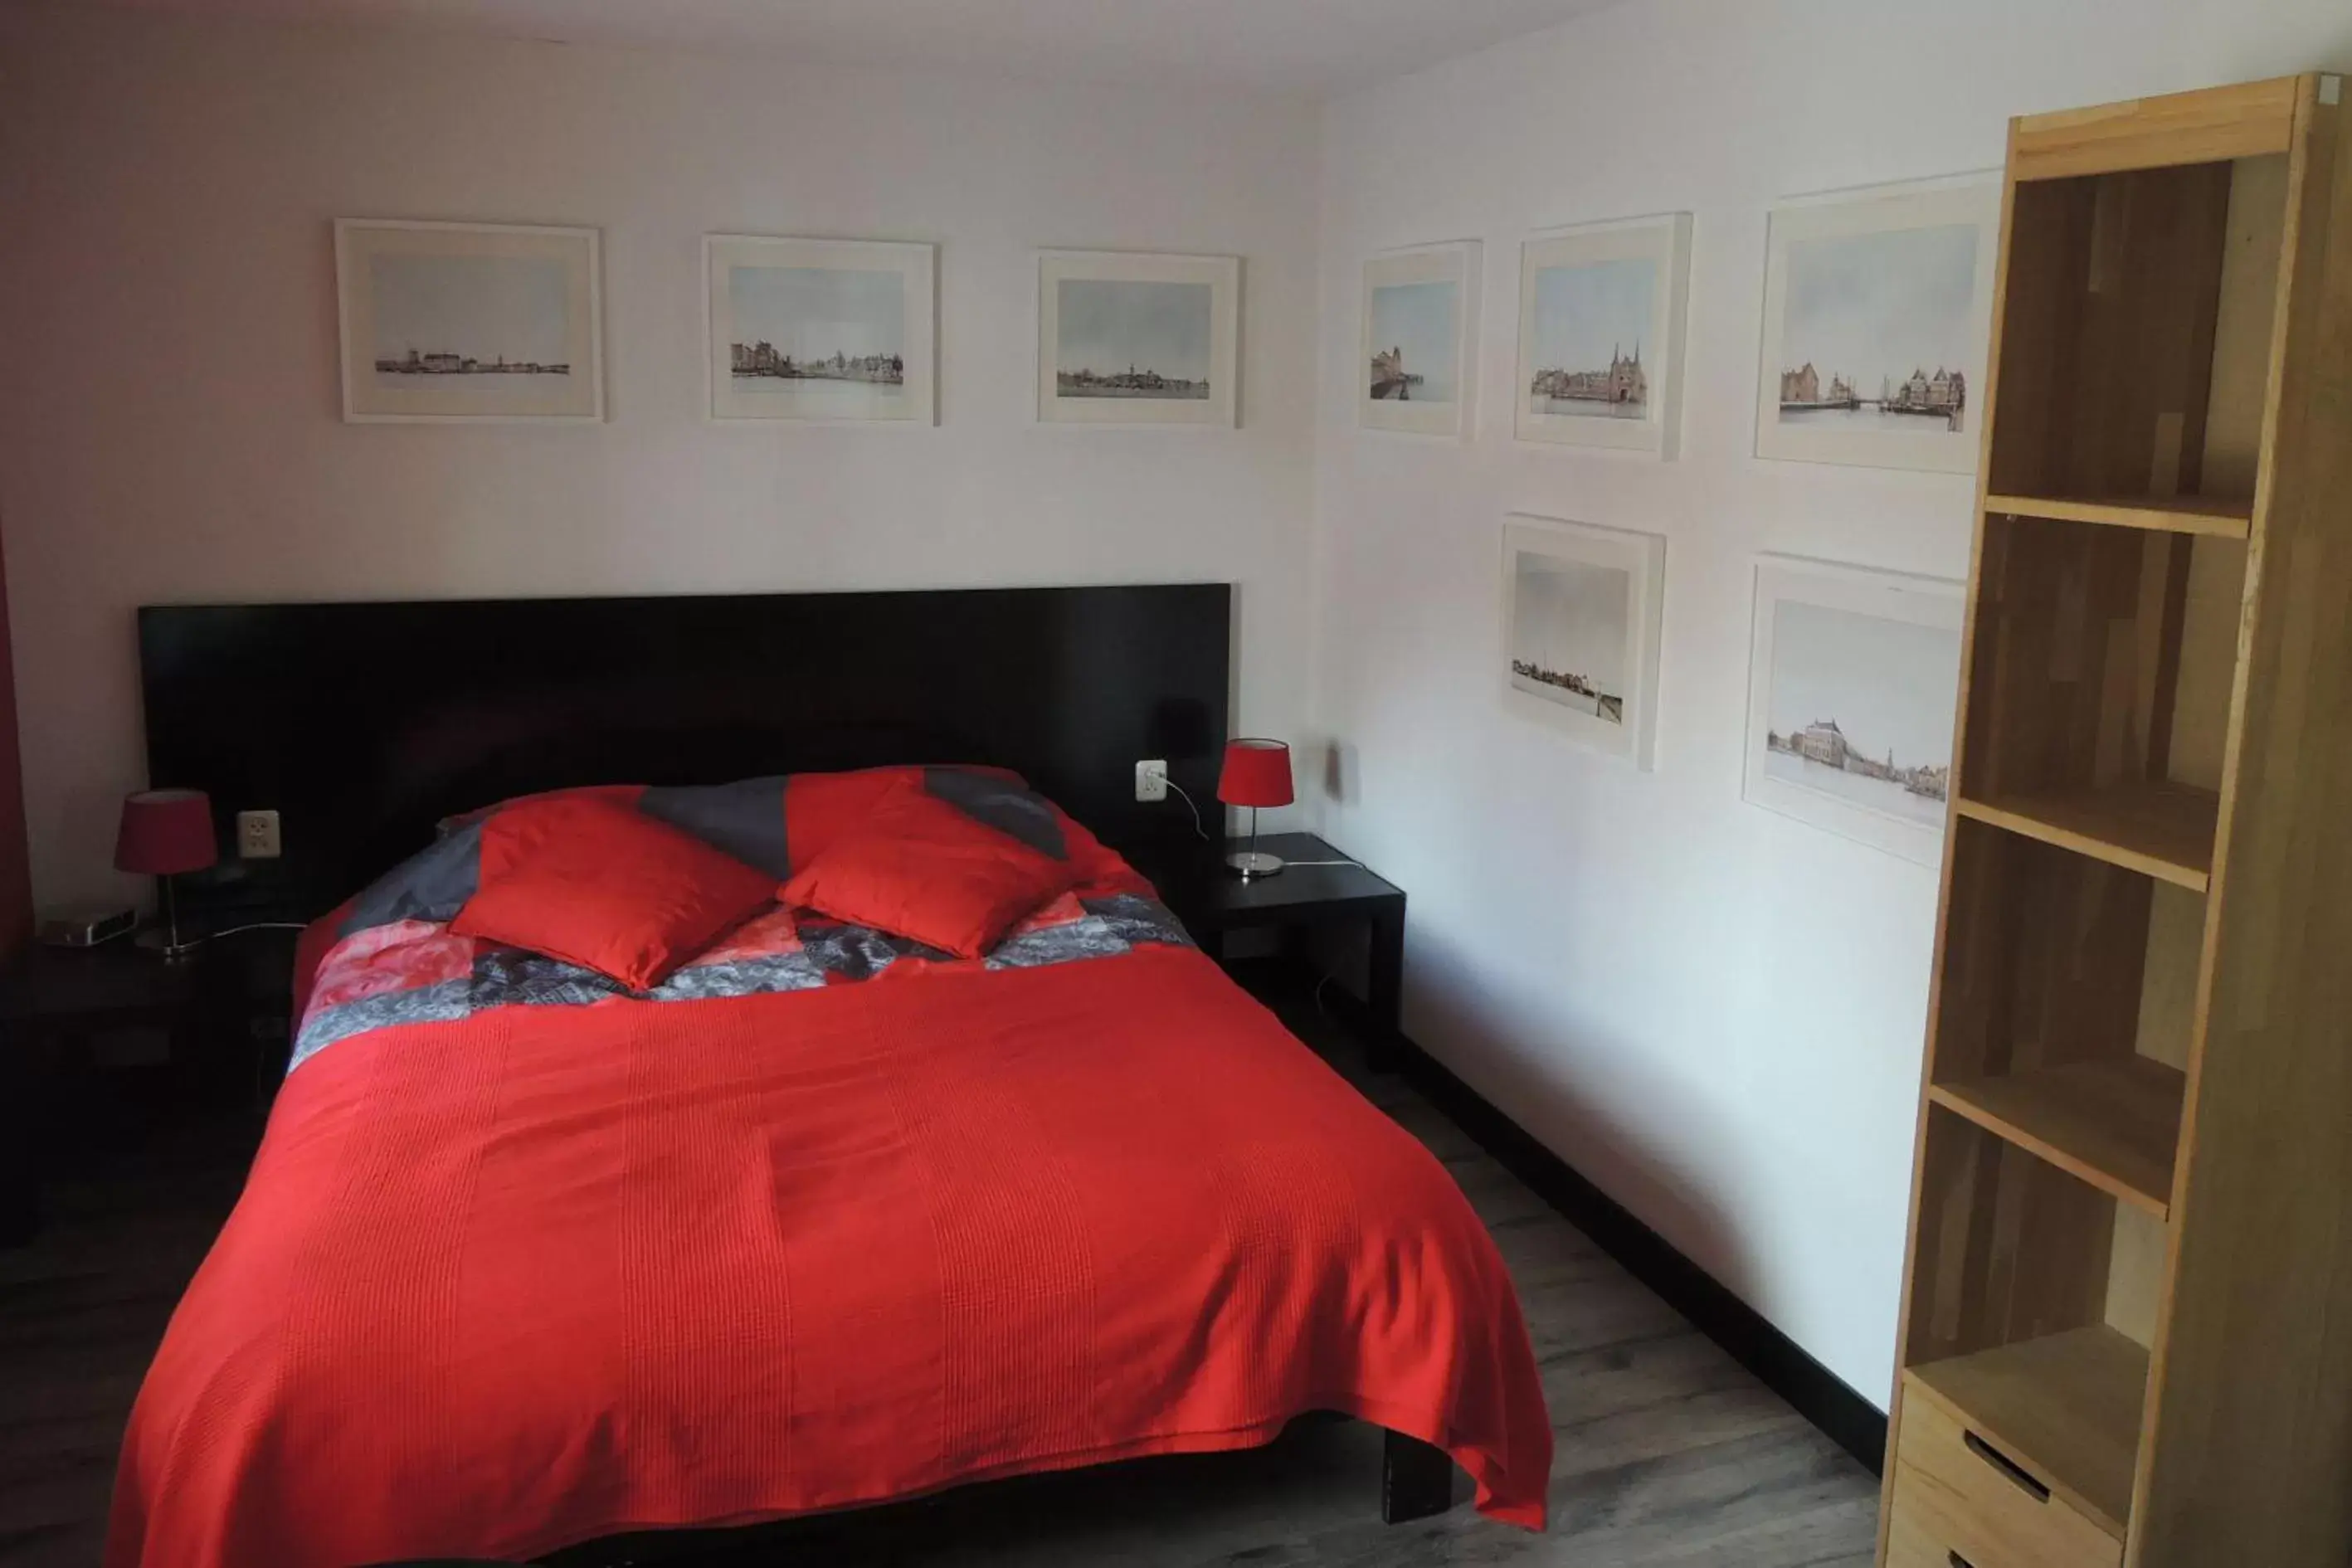 Bed, Room Photo in Bed&Breakfast Maasland